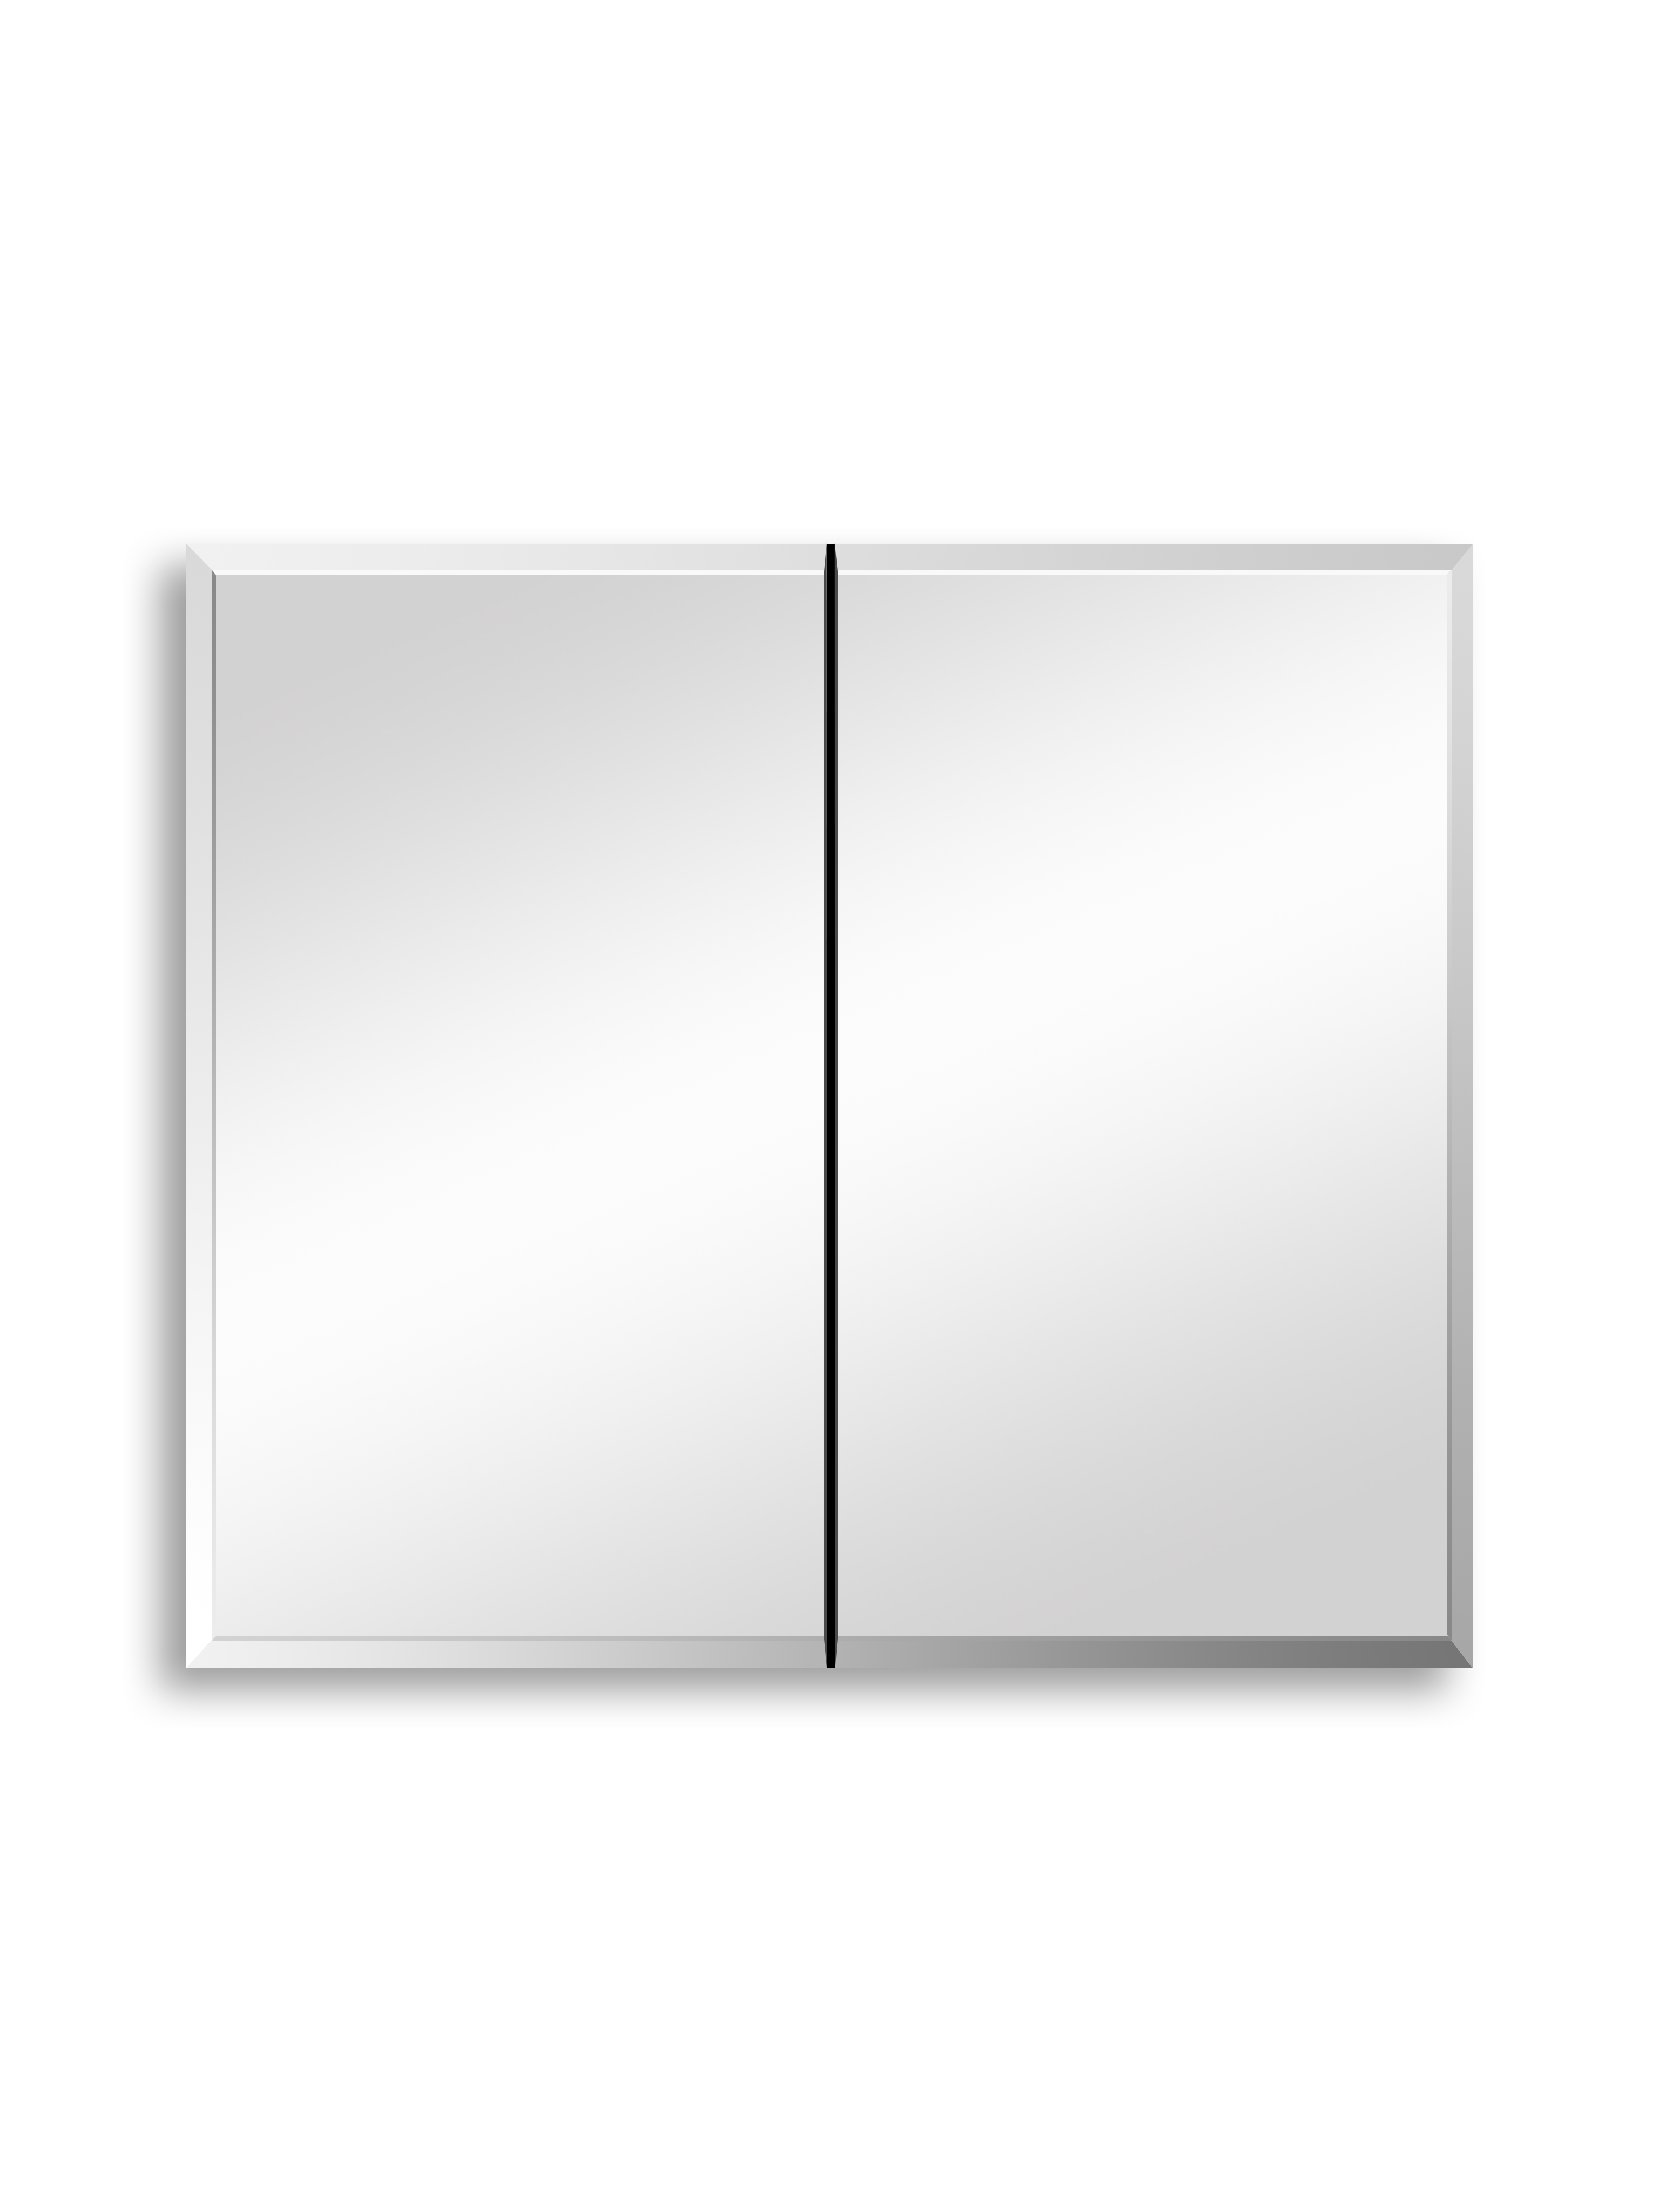 30x26 inch Double door mirror medicine cabinet Surface Mount or Recess aluminum-Boyel Living